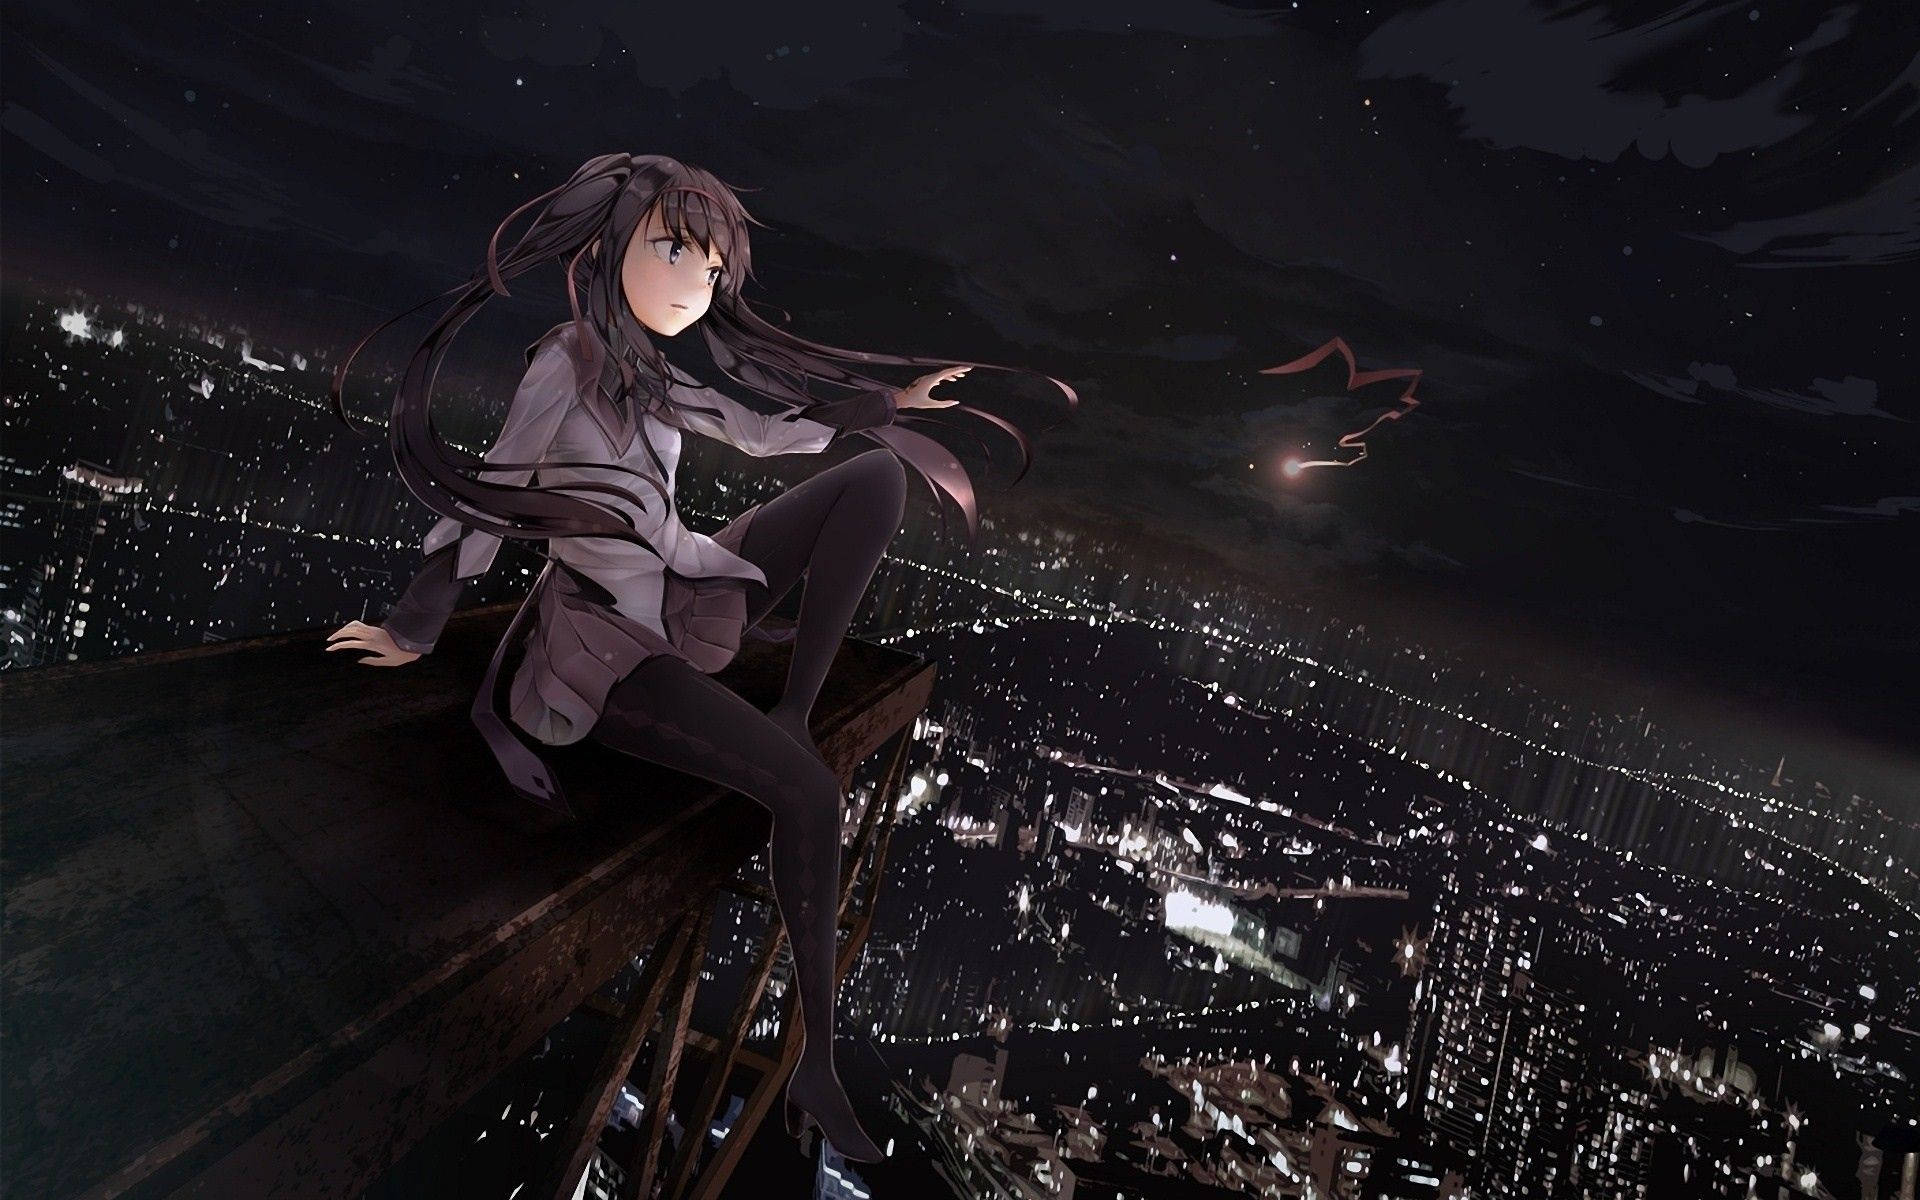 Anime Girl Sad Alone On Ledge City View Background